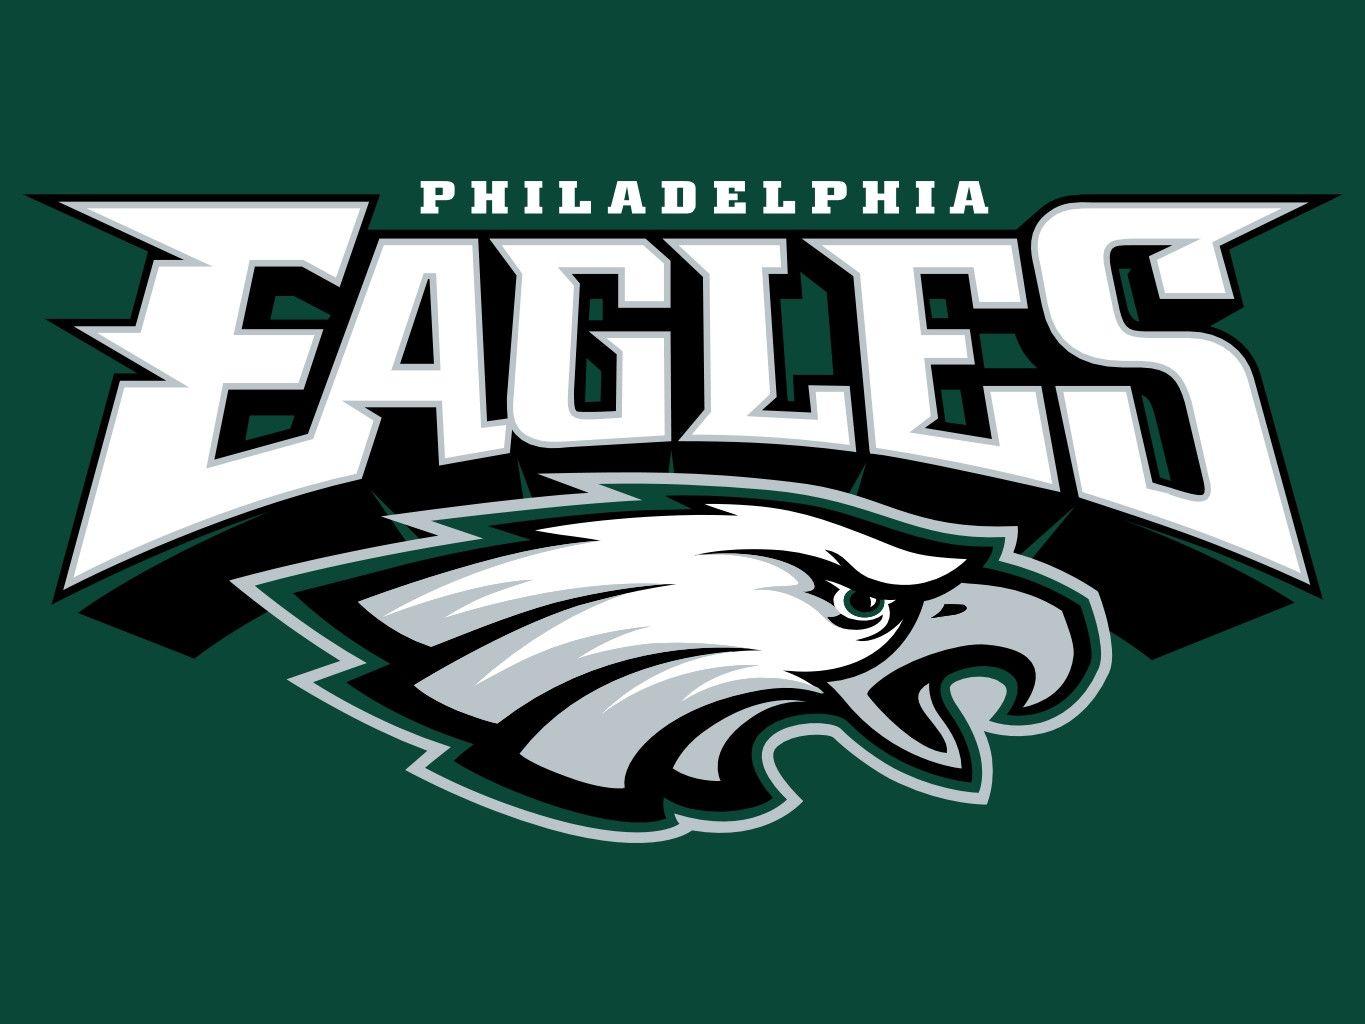 Philadelphia Eagles HD Wallpaper & Picture